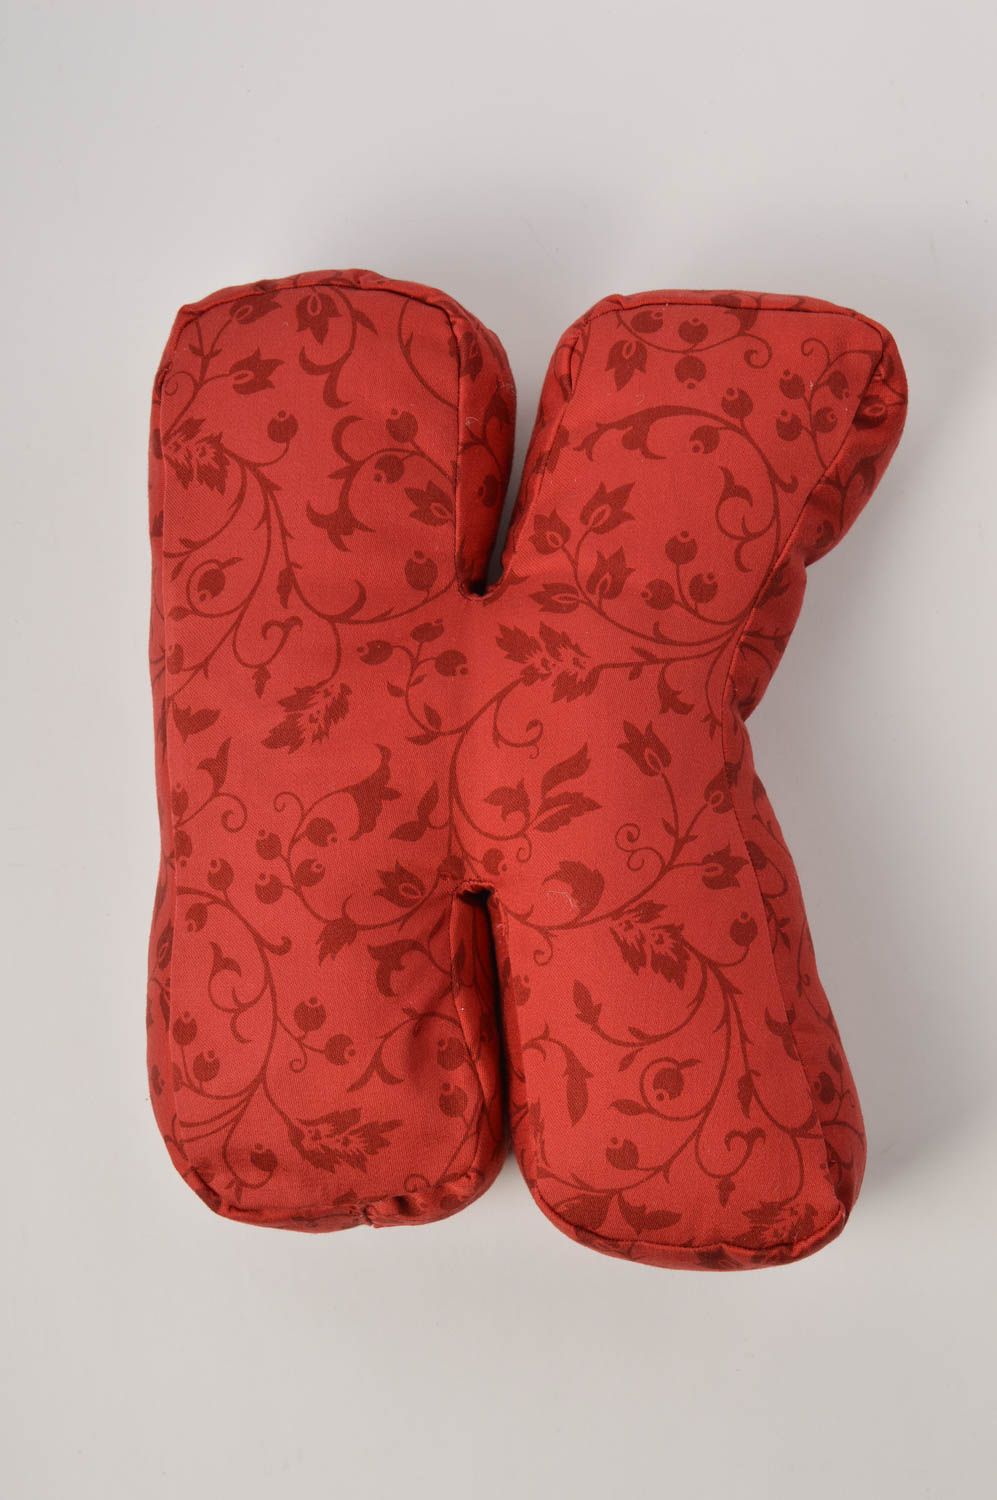 Unusual handmade cushion ideas throw pillow gift ideas decorative use only photo 3